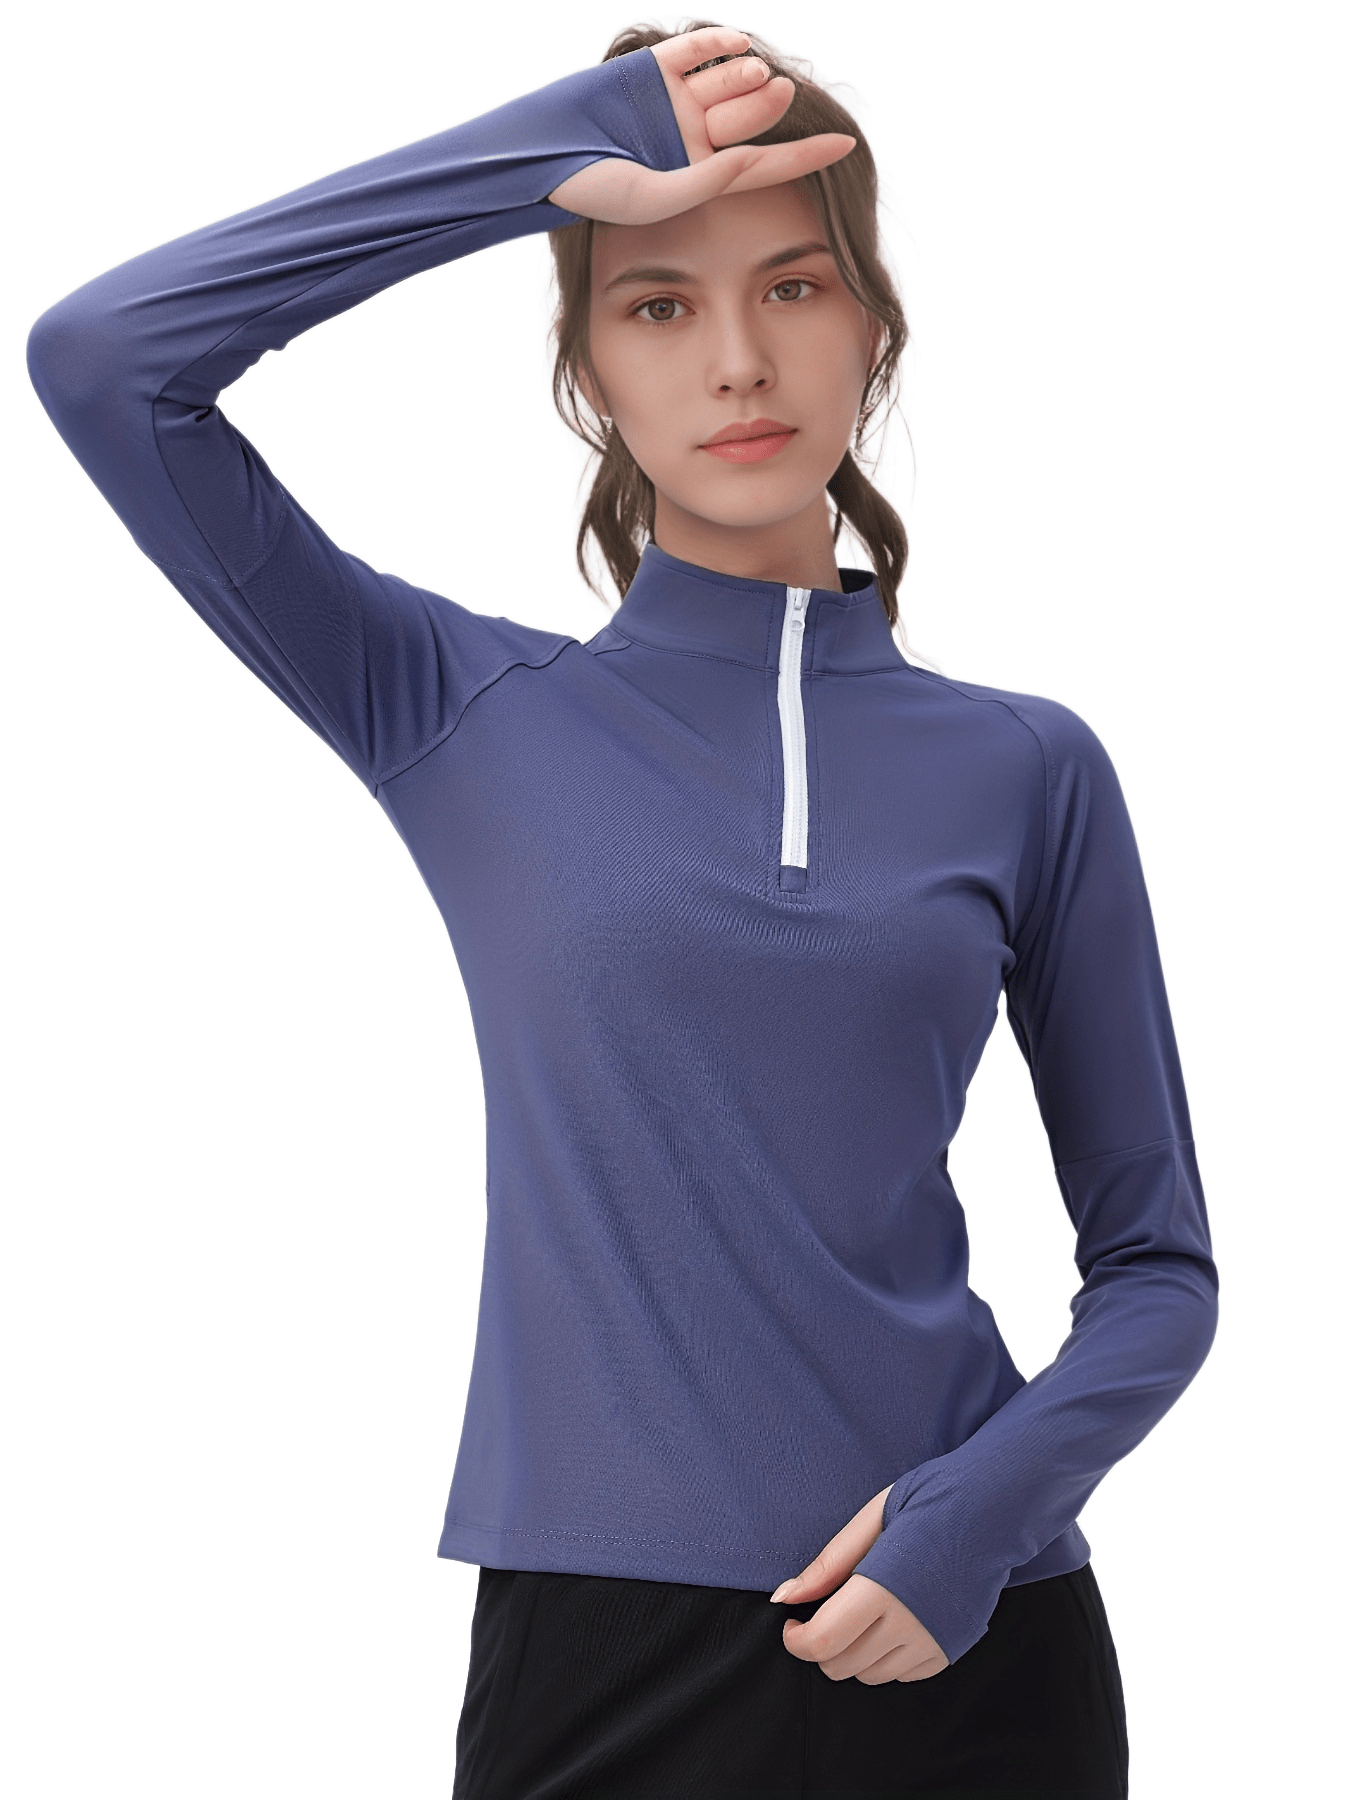 Long Sleeve Workout Shirts Yoga Tops for Women T Shirt Activewear Top